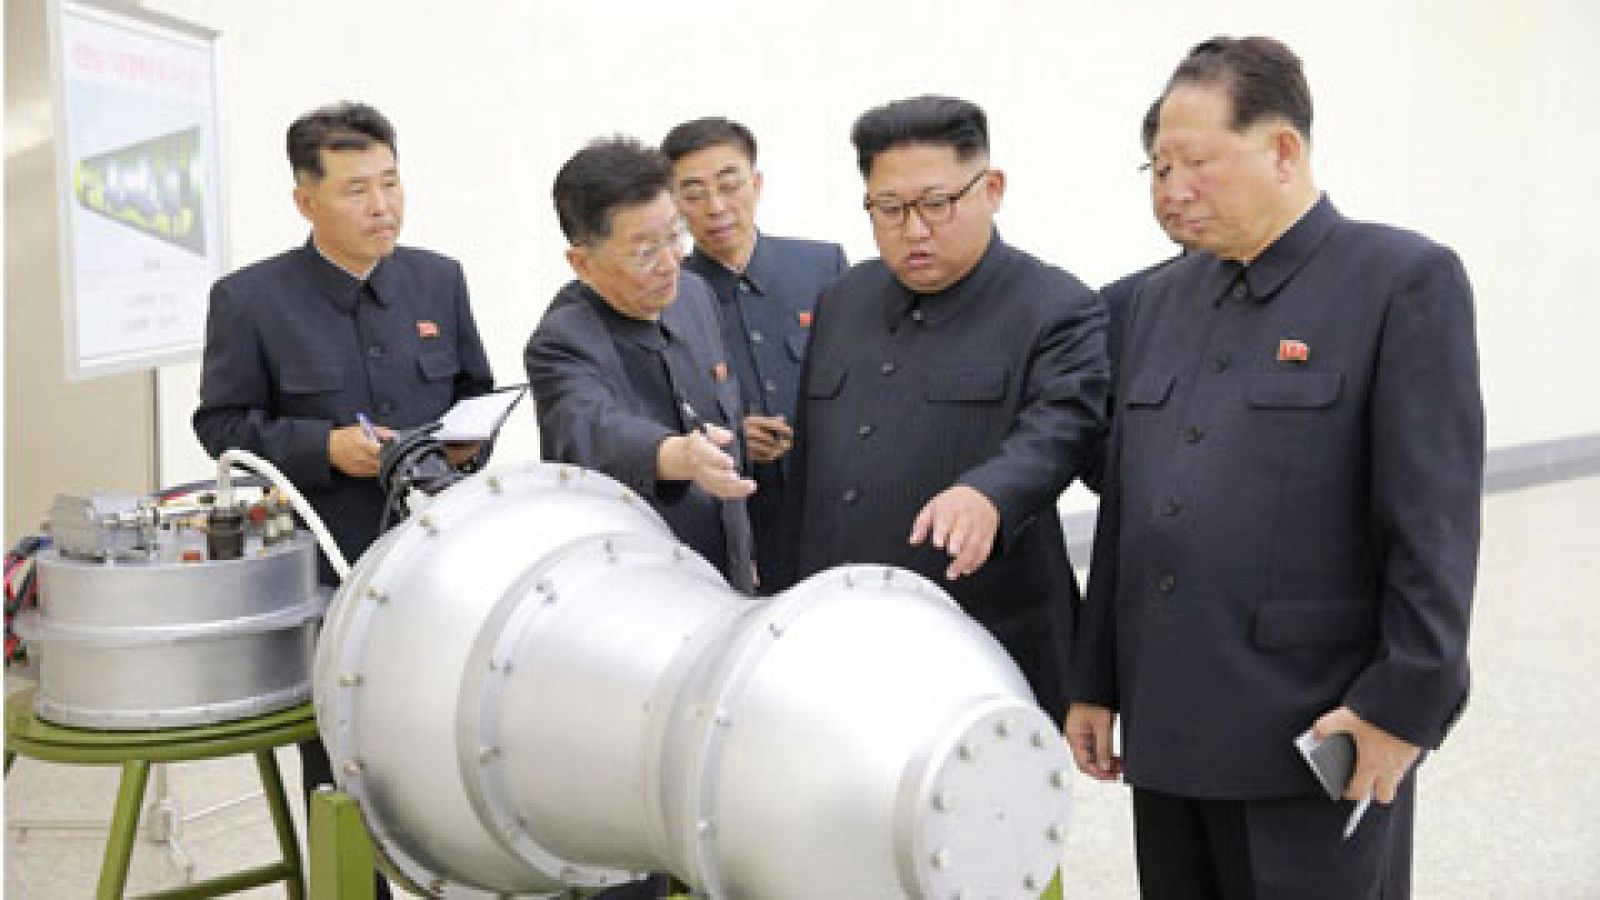 Telediario 1: Corea del Norte ha probado "con éxito" la bomba de hidrógeno | RTVE Play